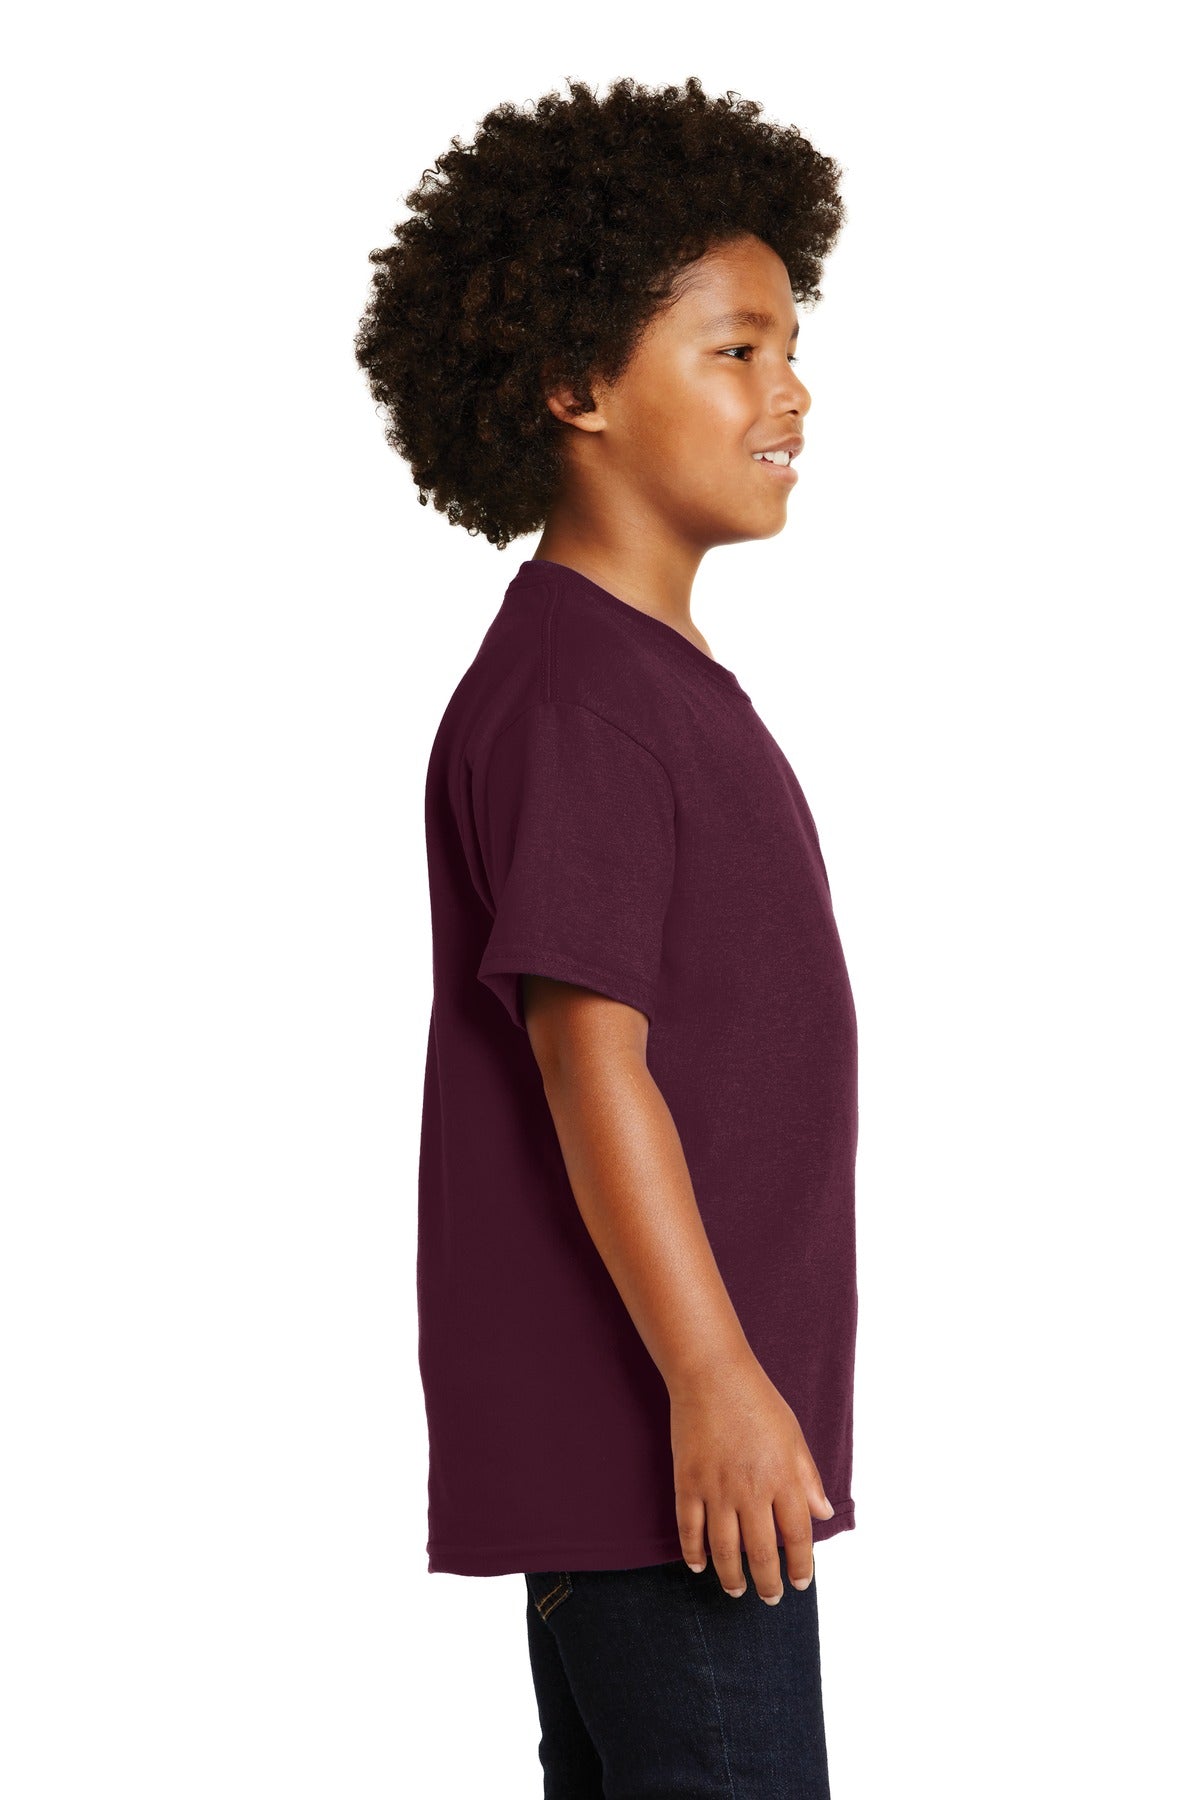 Gildan® - Youth Ultra Cotton®100% US Cotton T-Shirt. 2000B [Maroon] - DFW Impression